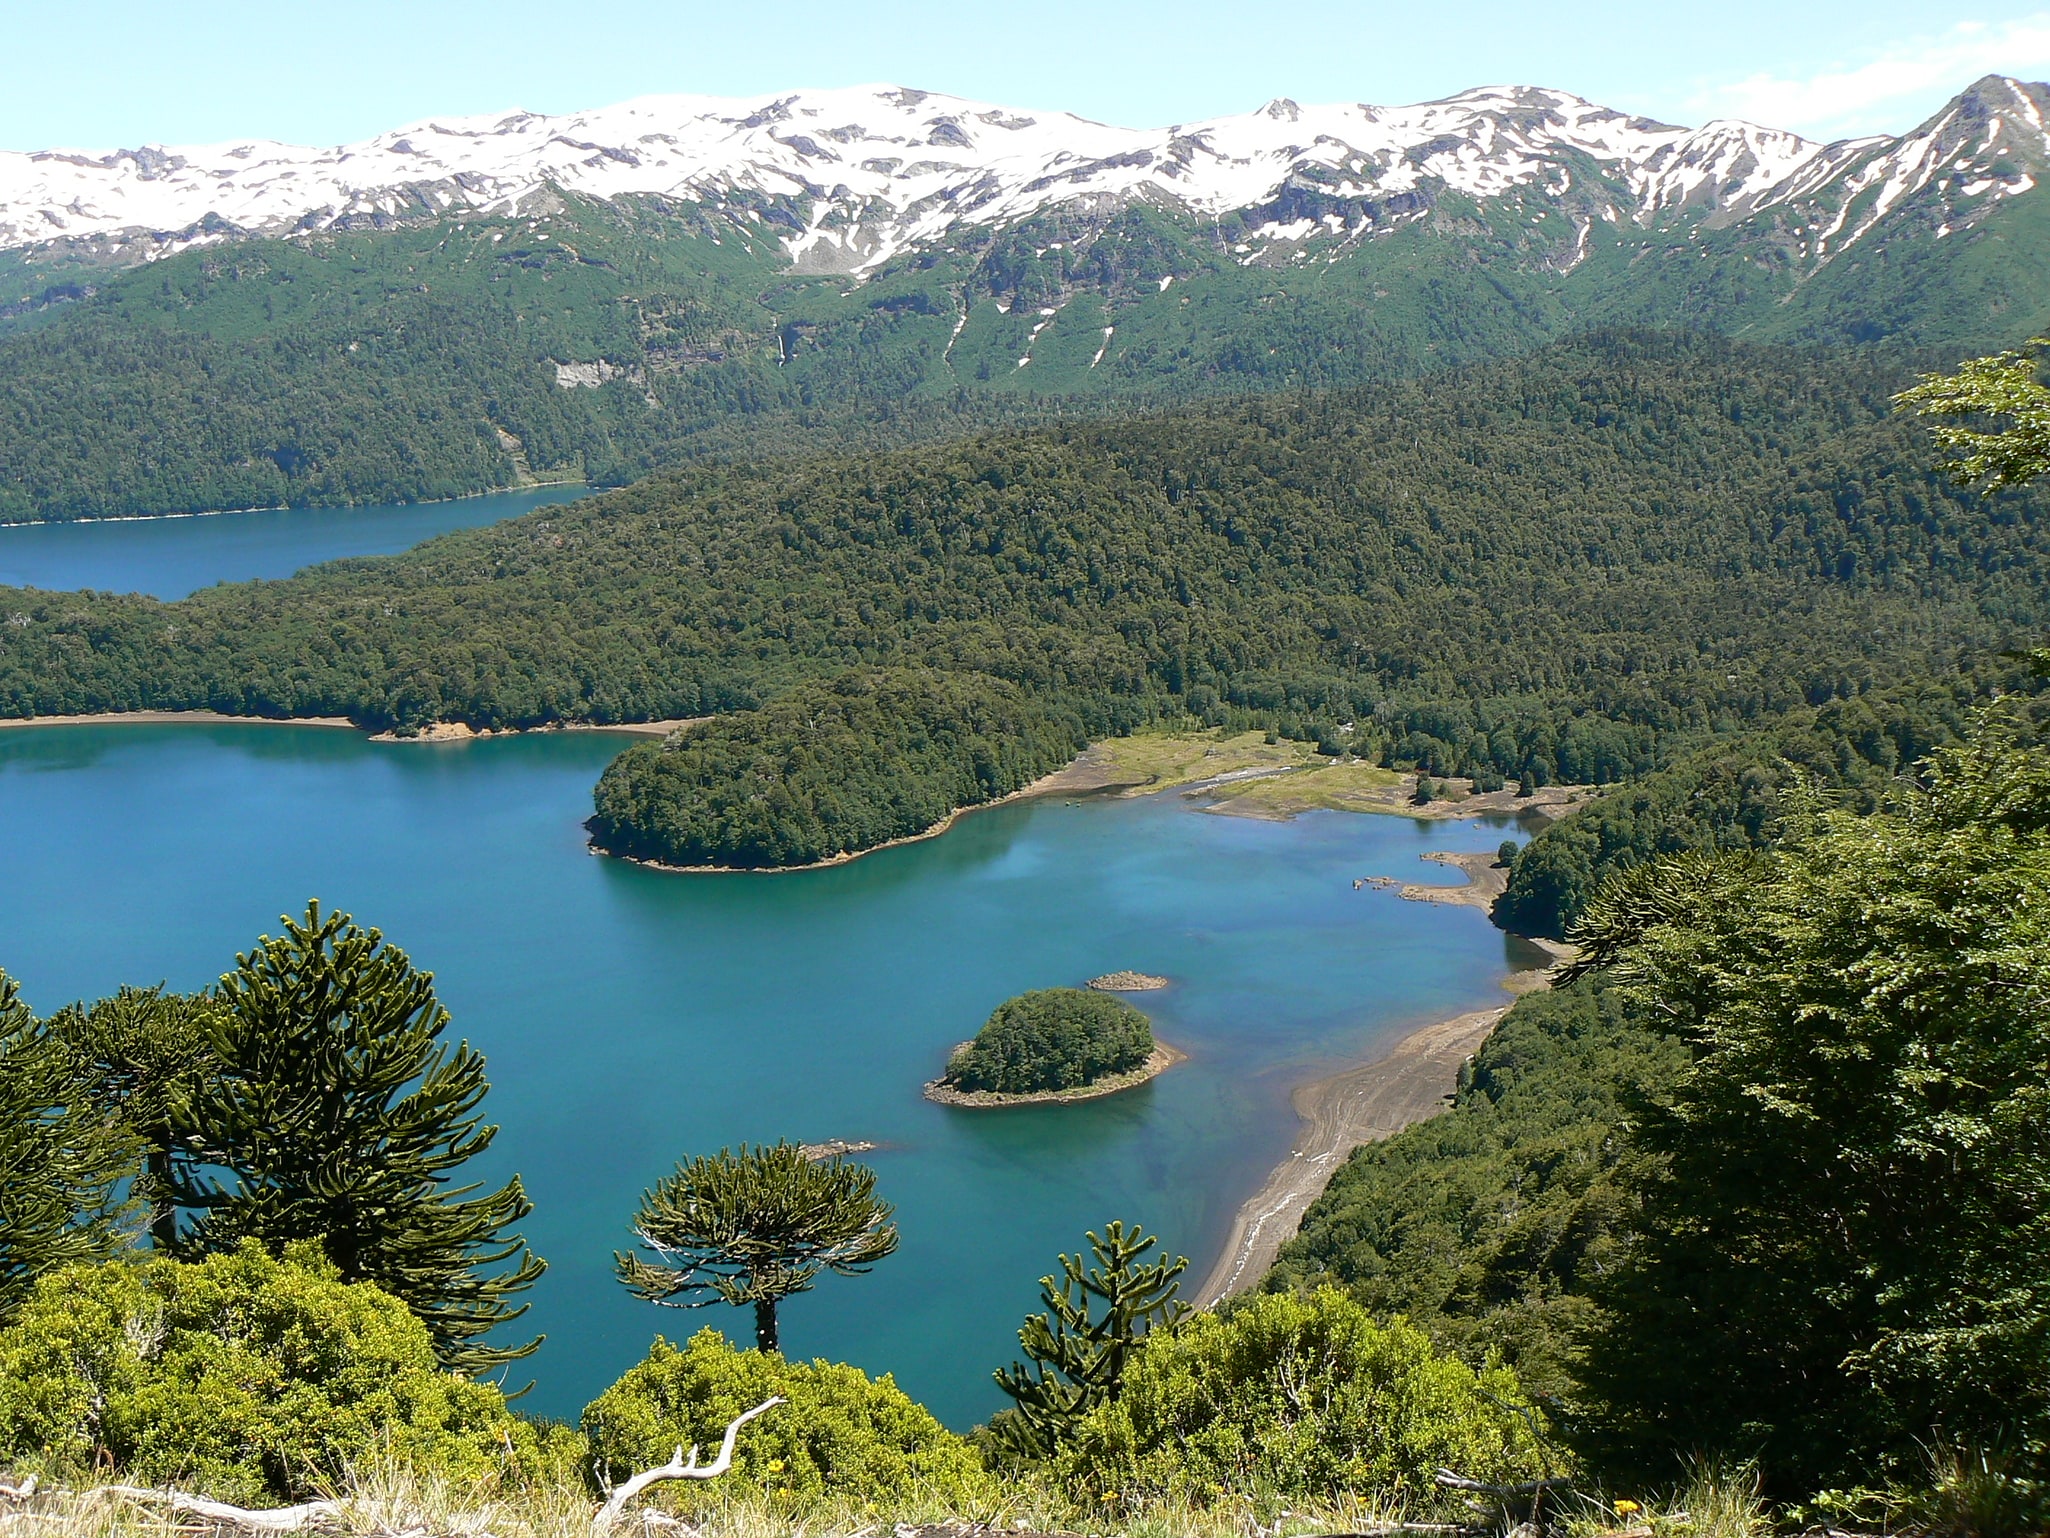 Park Narodowy Conguillío, Chile